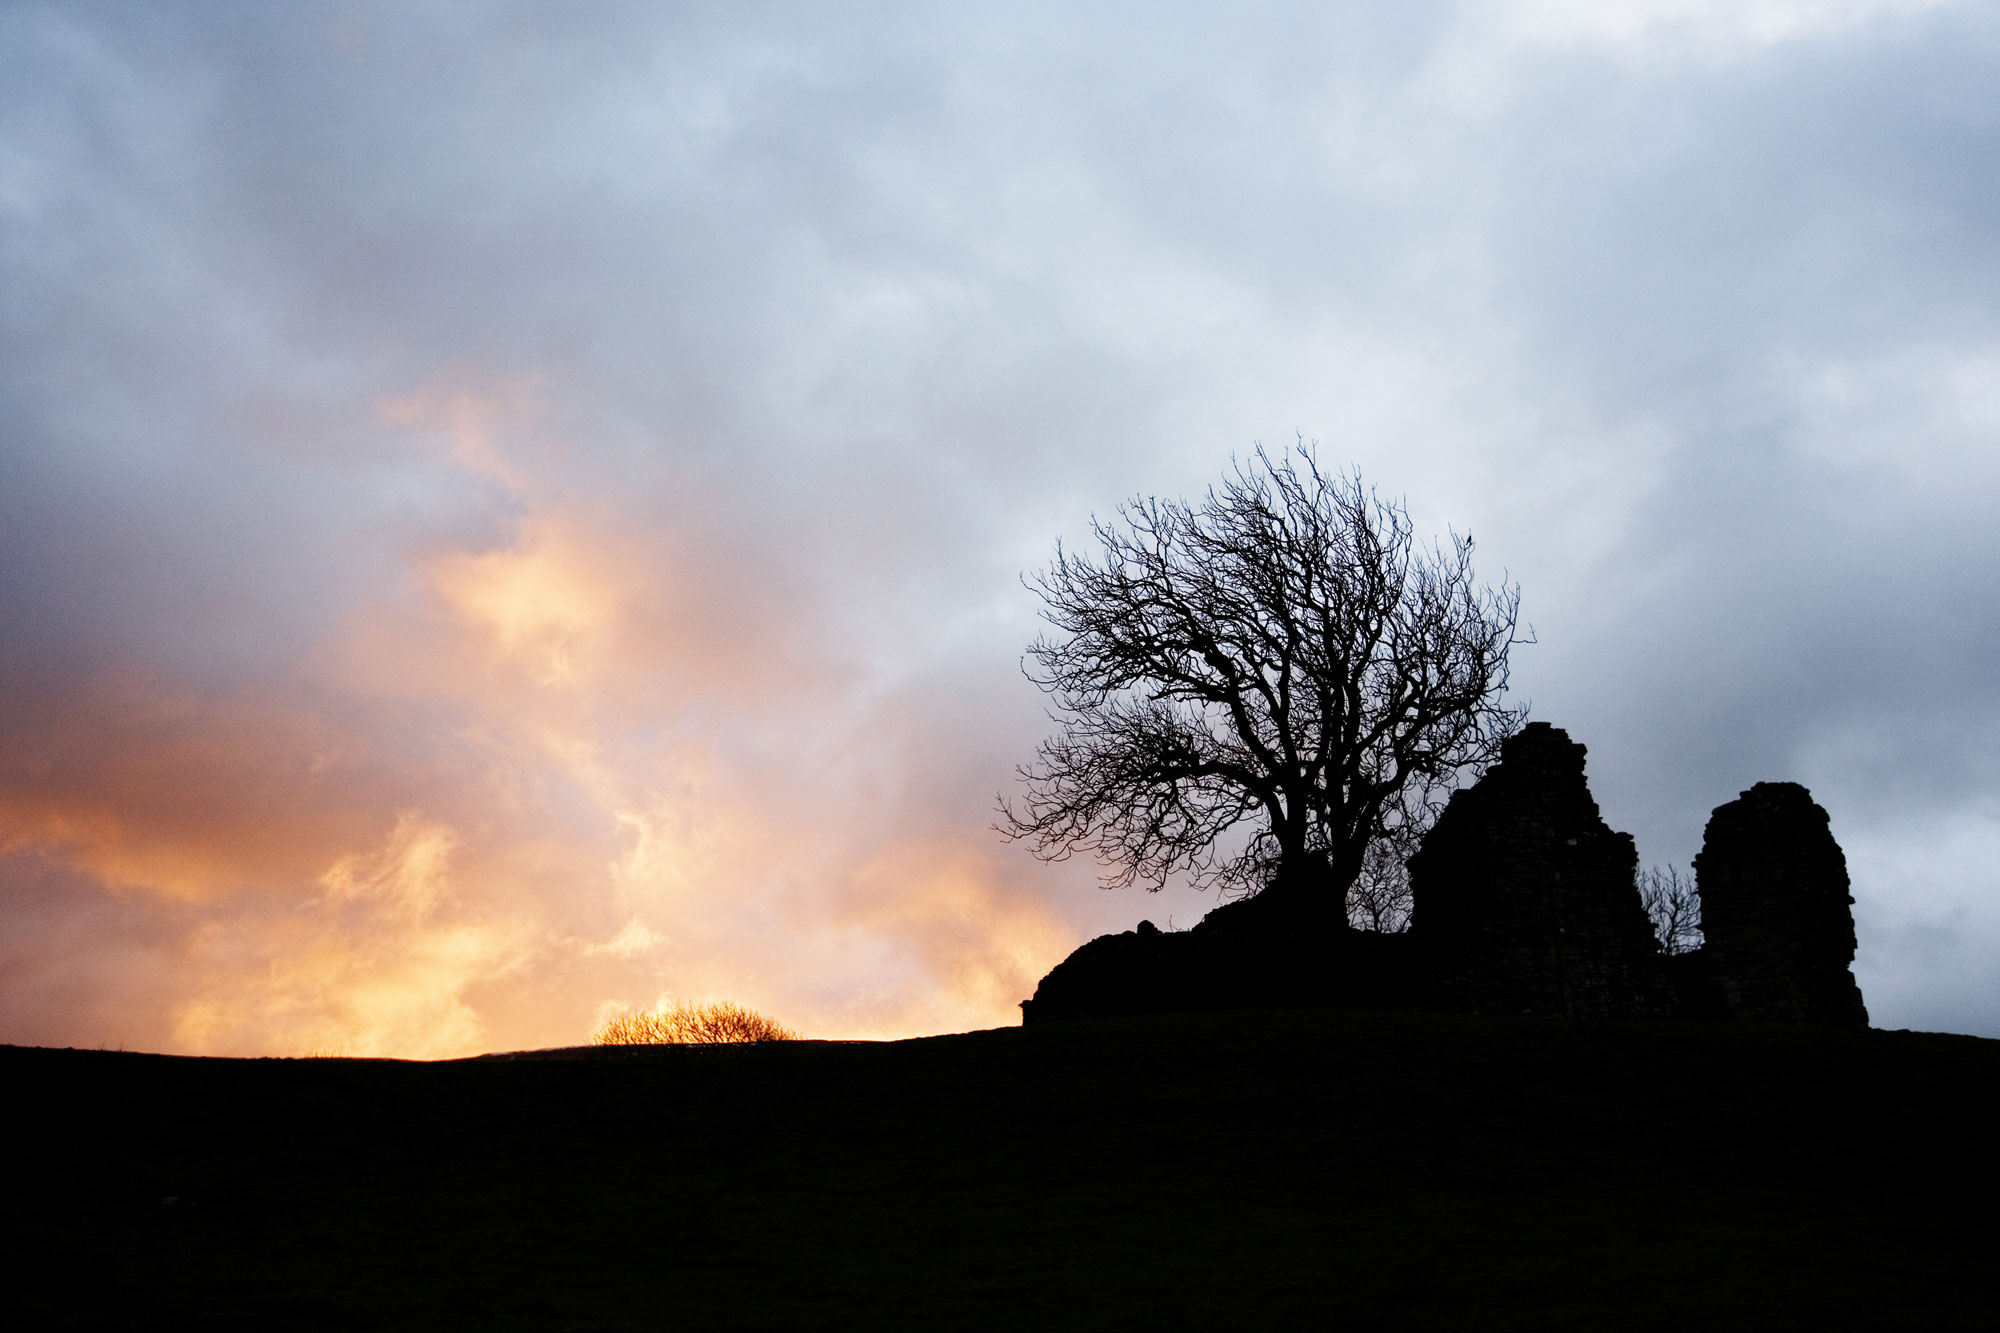 Pendragon Castle in Mallastang Dale, near to Kirkby Stephen